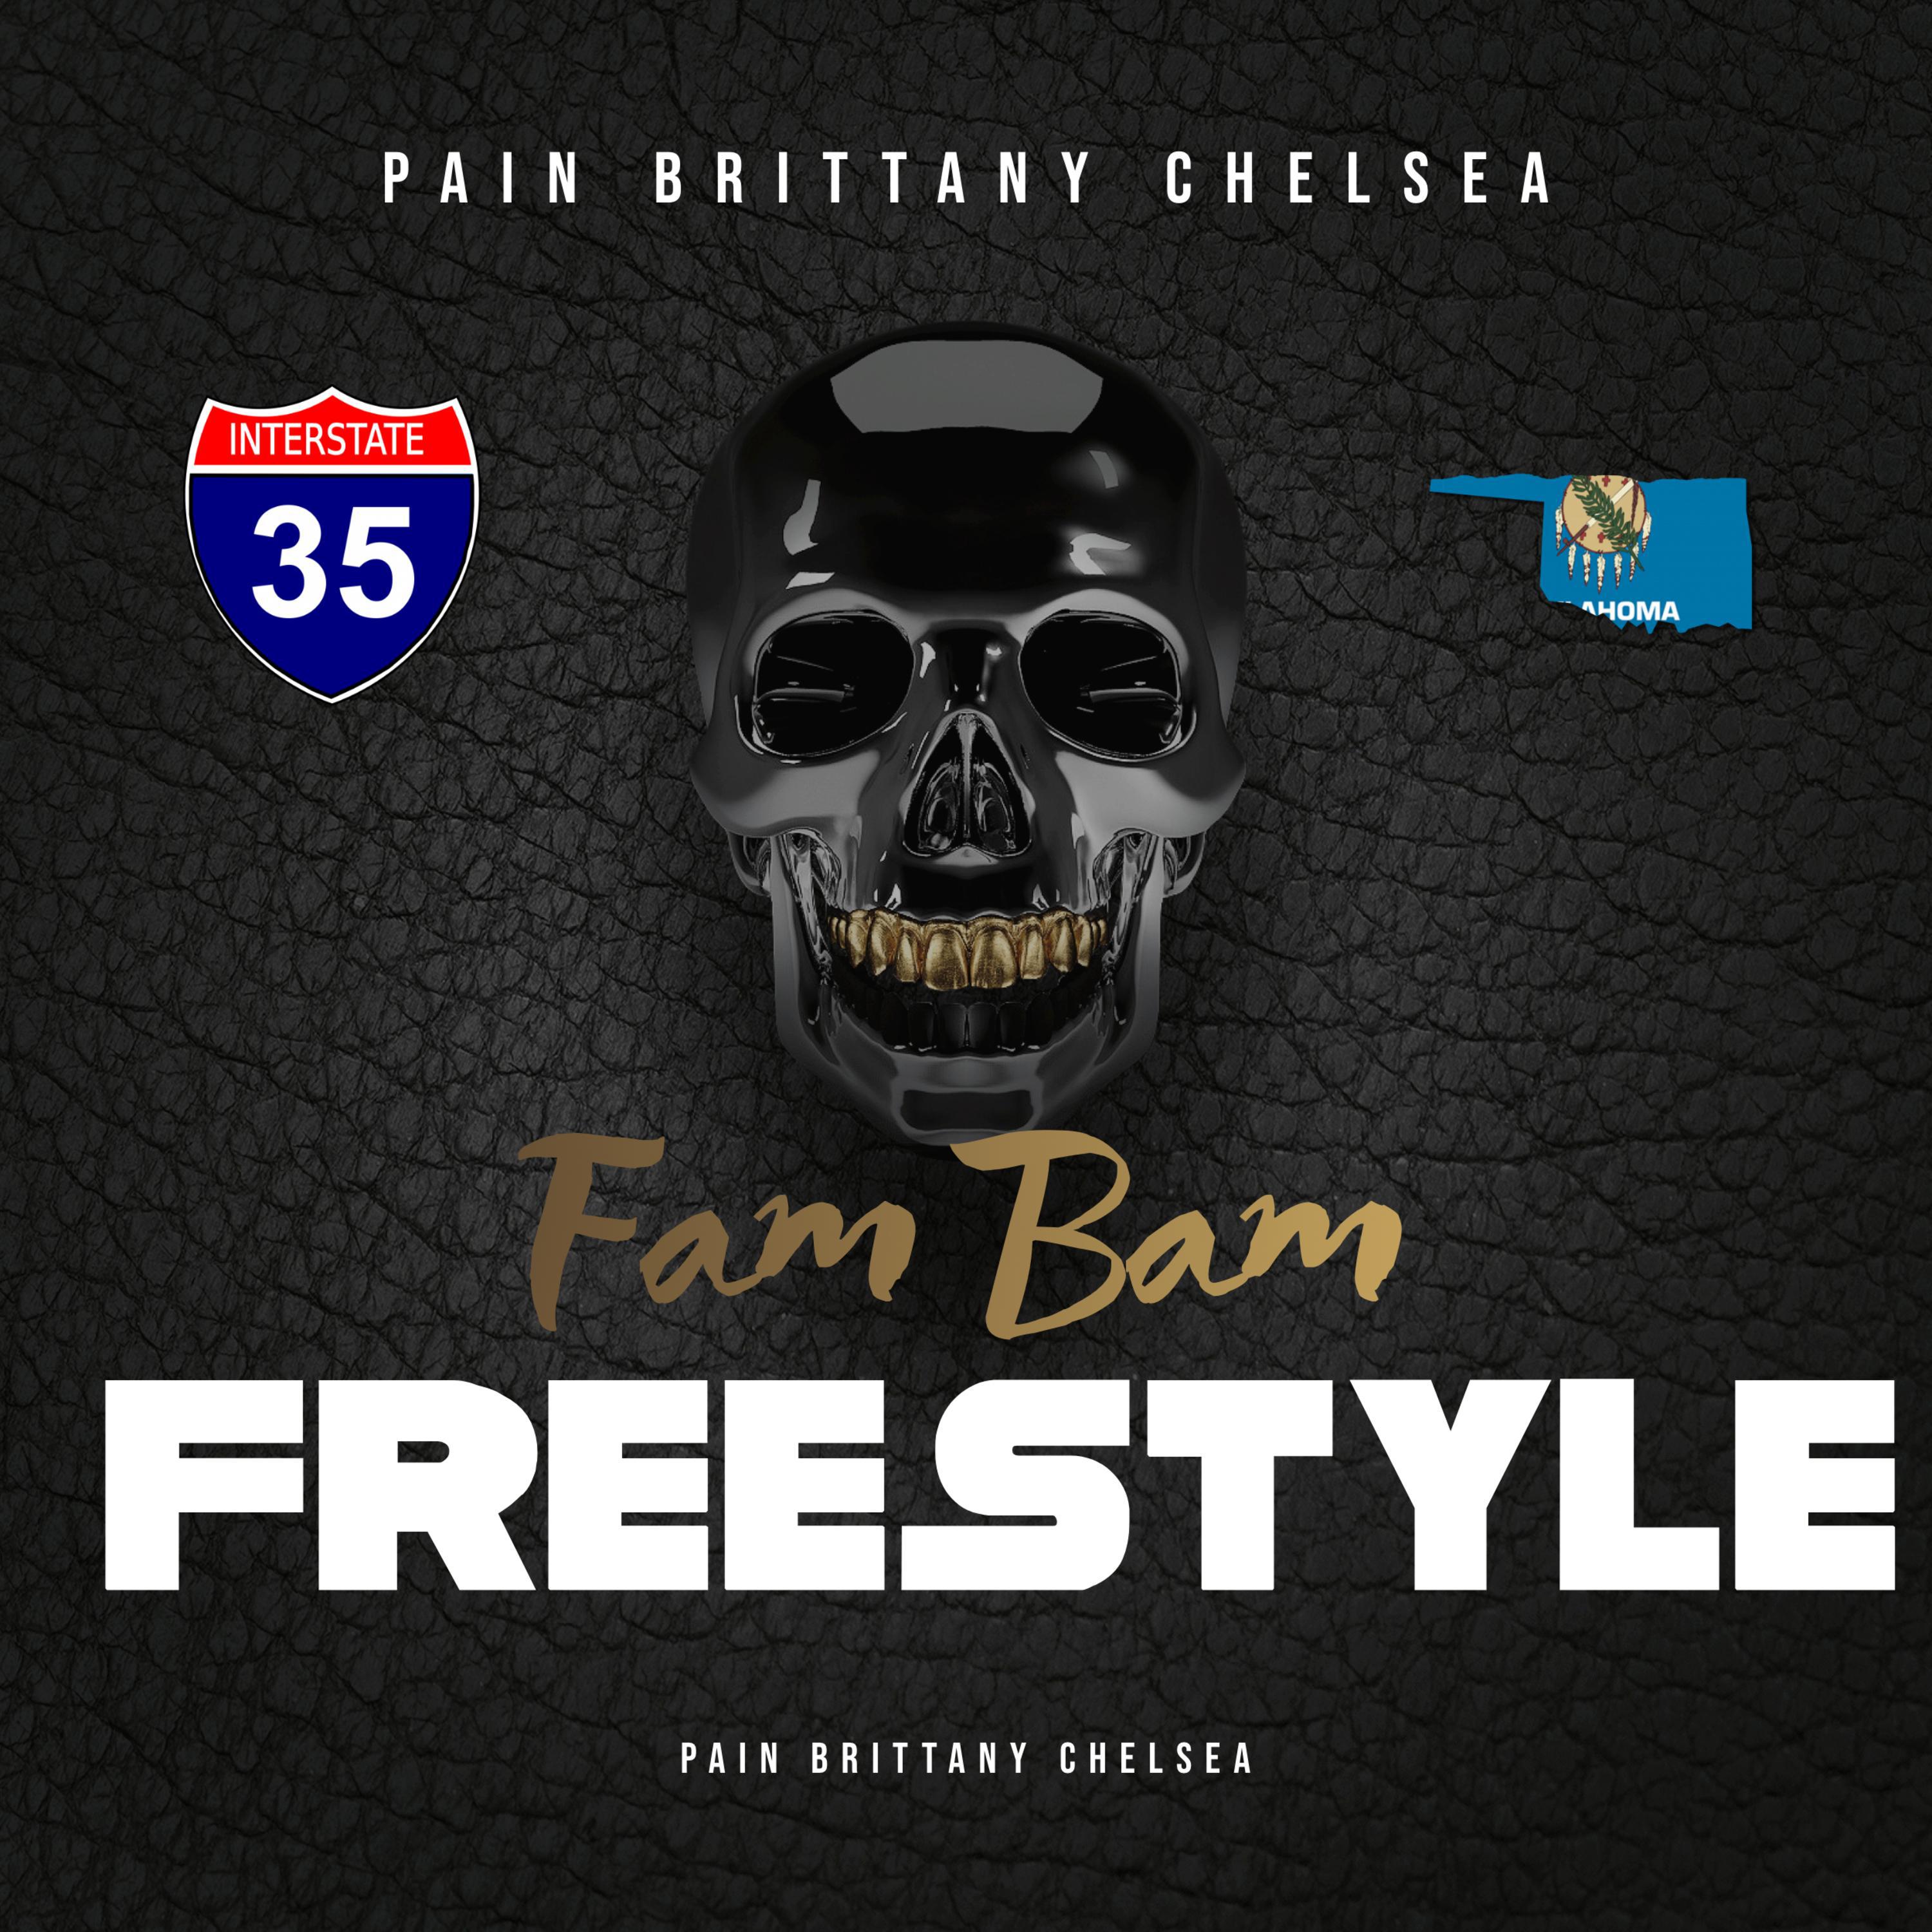 Fam Bam Freestyle